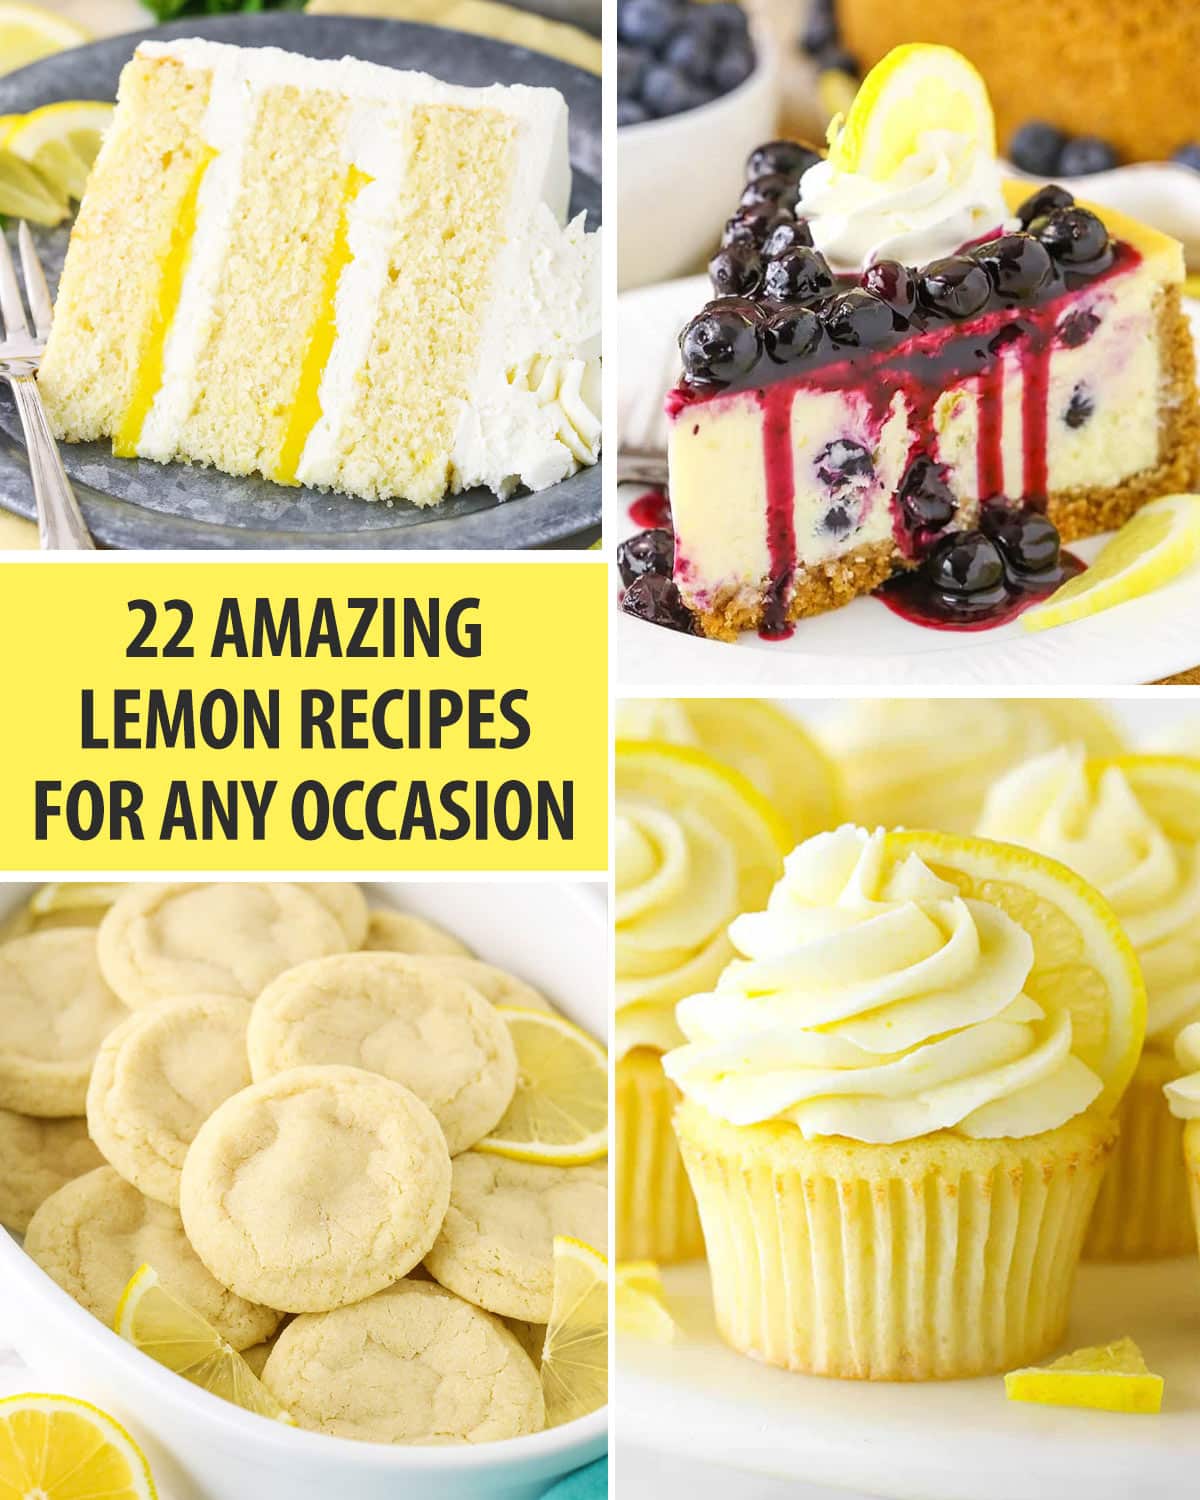 A collage image of 4 lemon desserts - lemon cake, lemon blueberry cheesecake, lemon cookies and lemon cupcakes